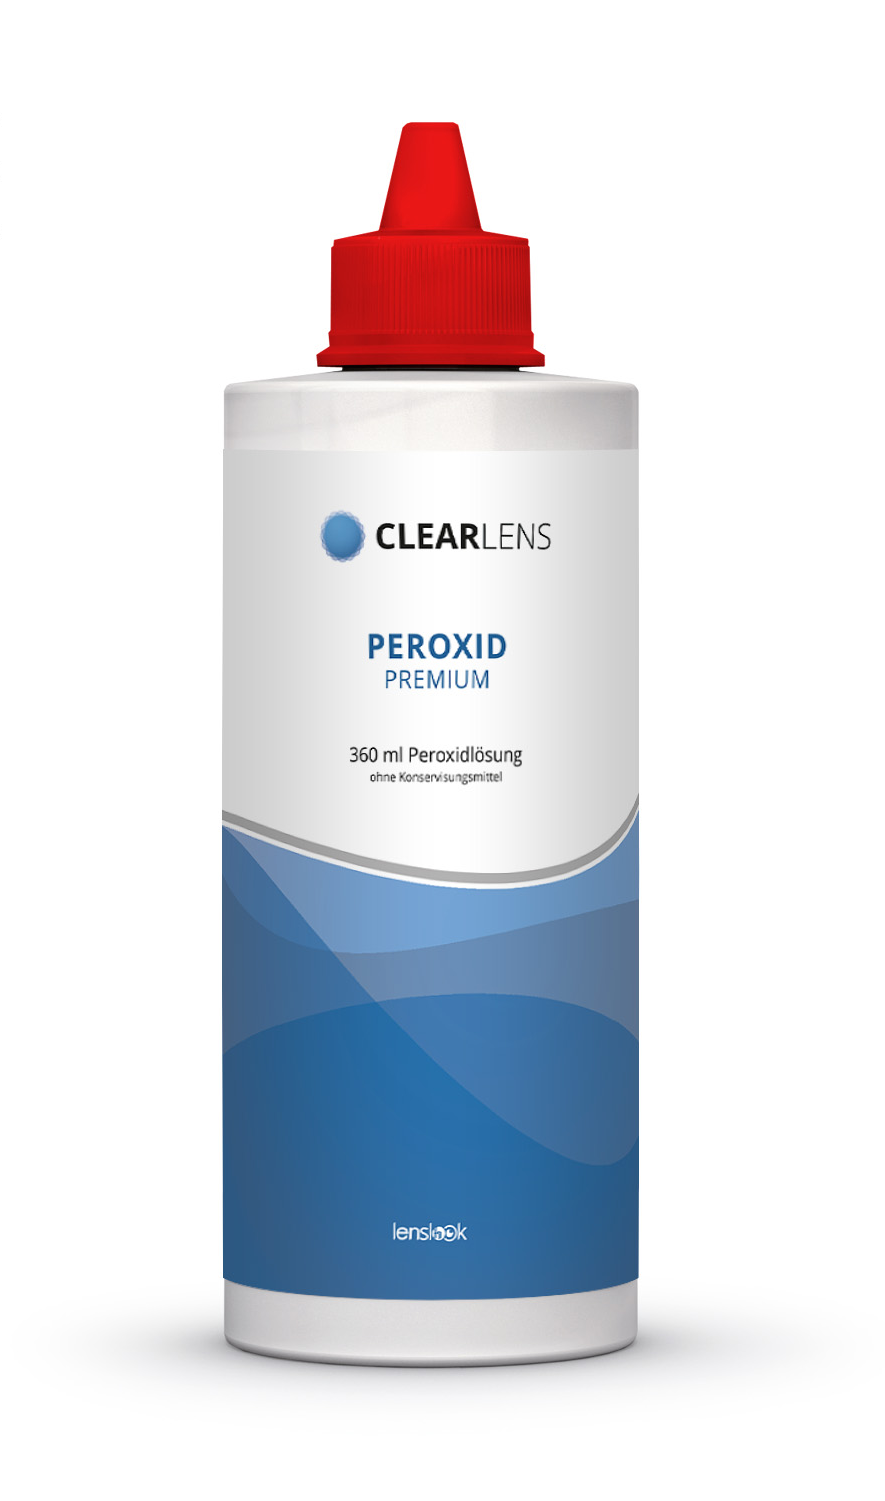 clearlens_premium_360ml_peroxid